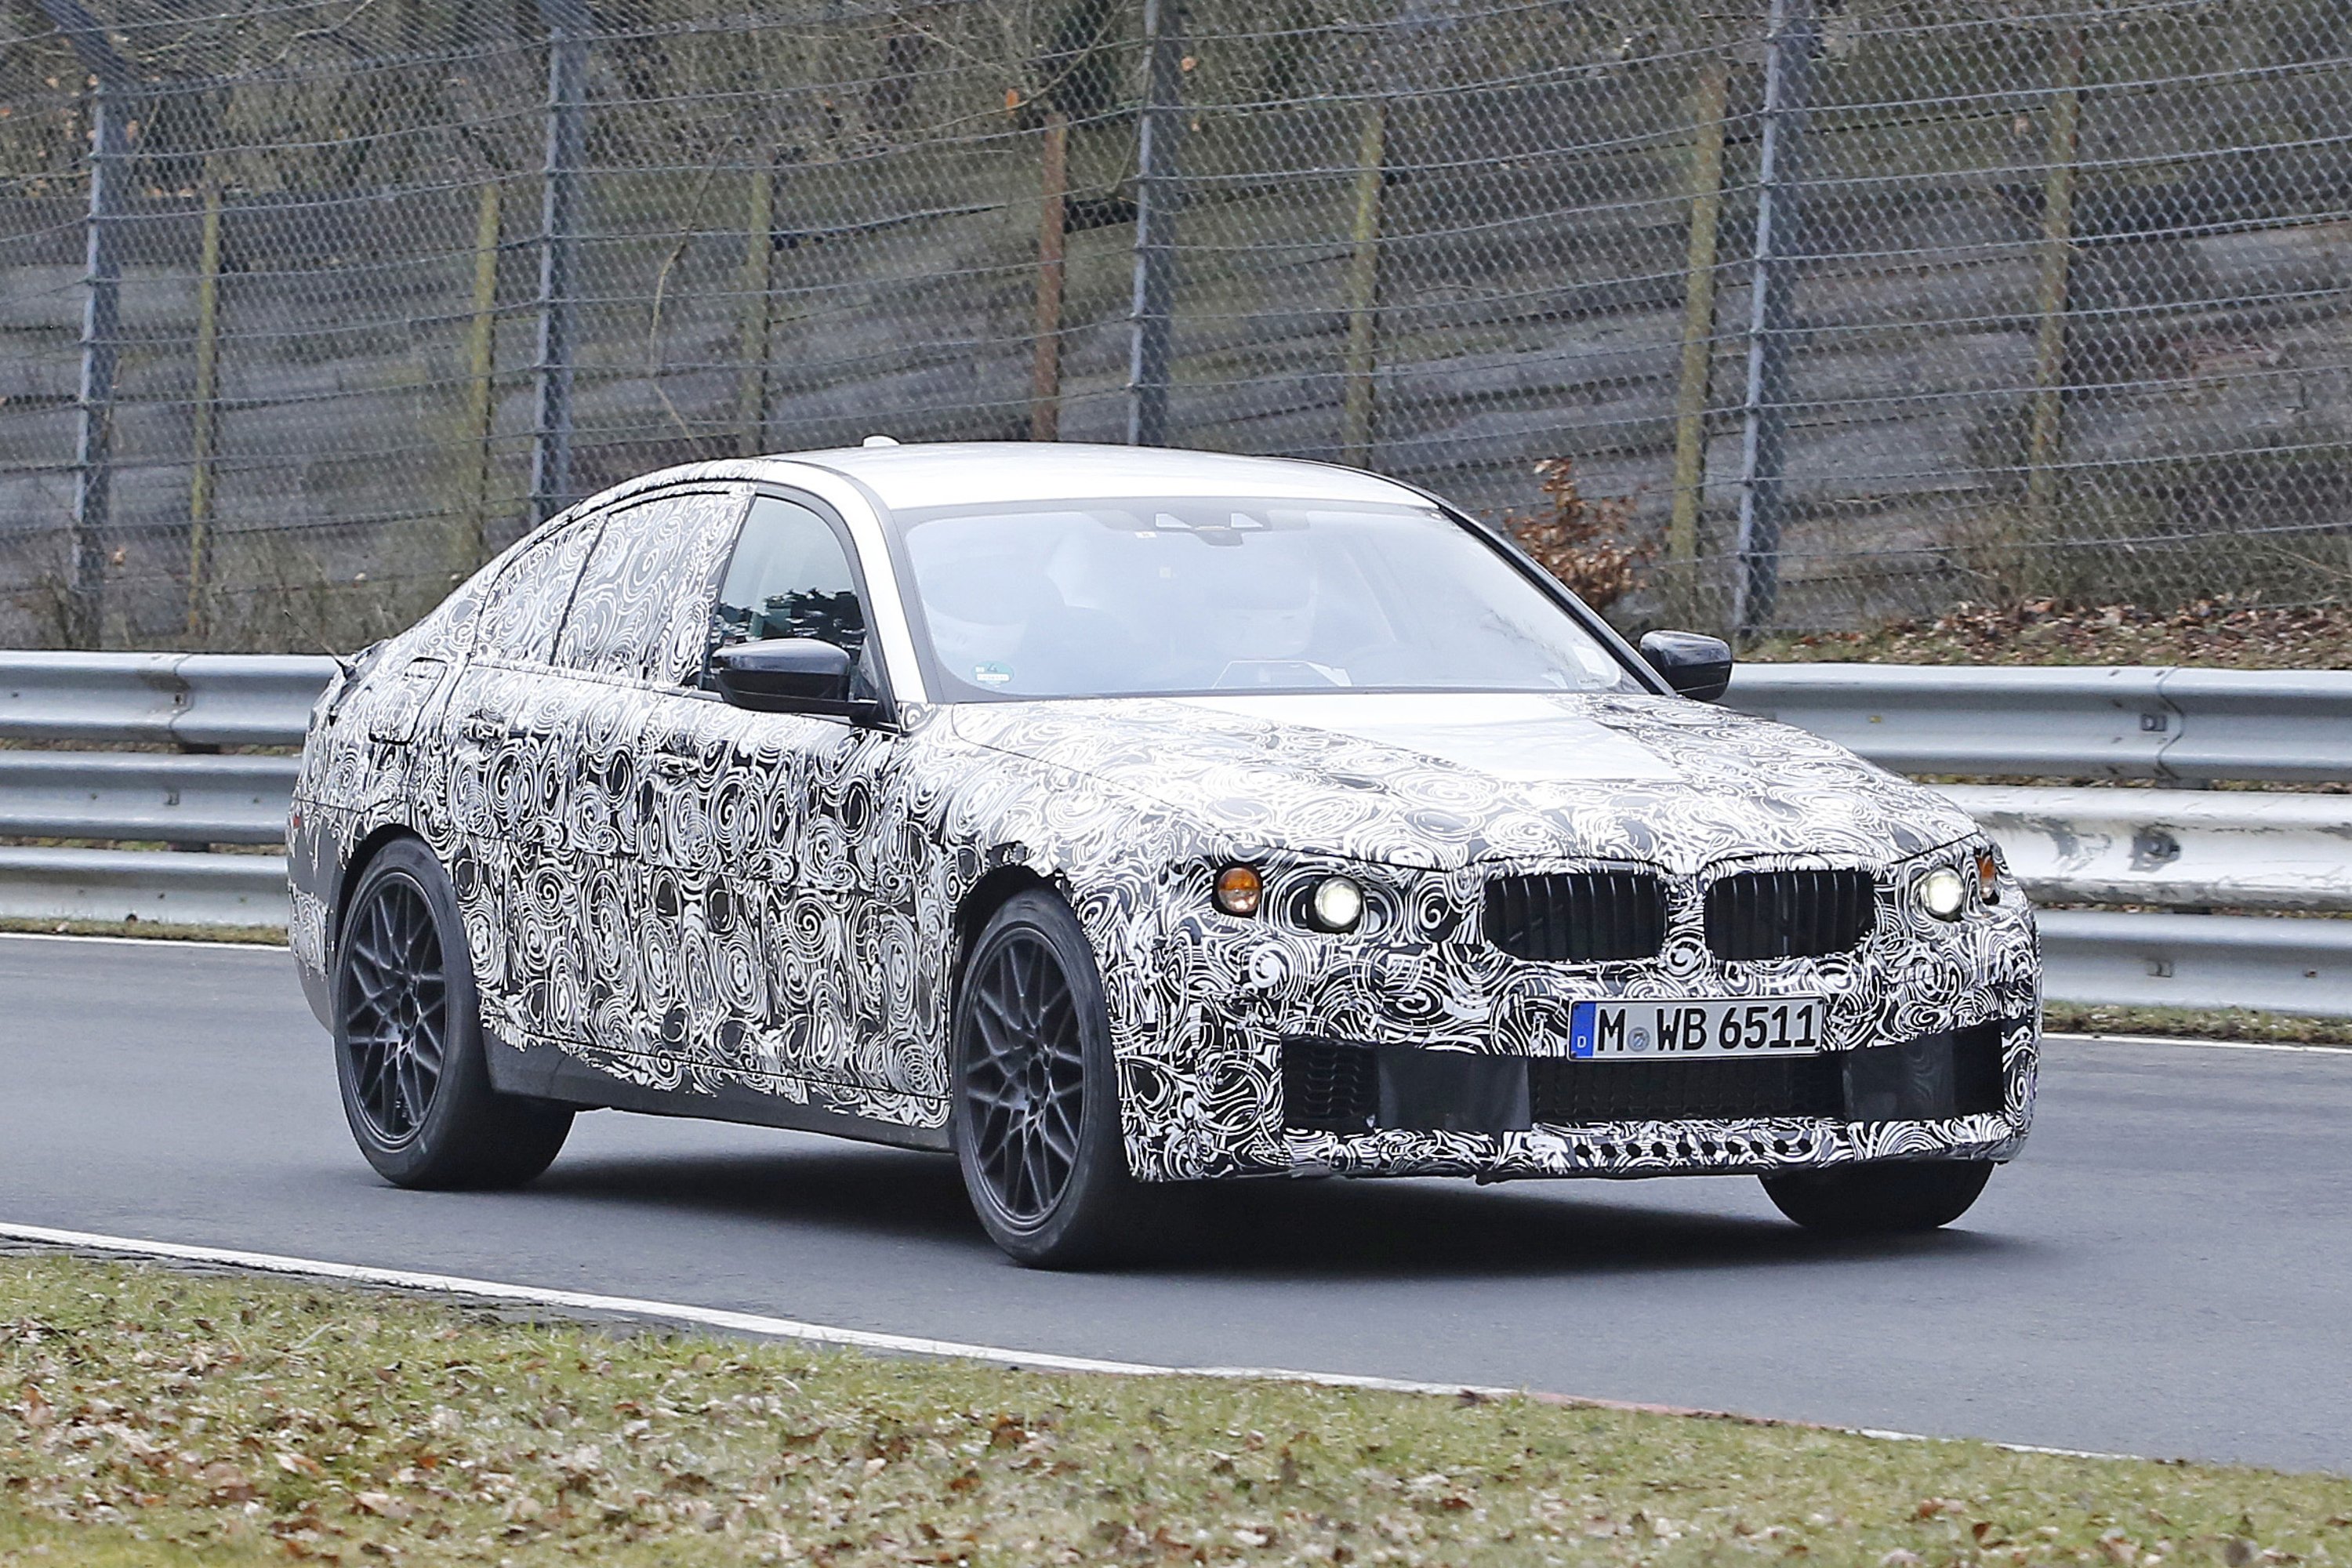 Nuova BMW M5: spiata al Nurburgring, sar&agrave; dotata di xDrive